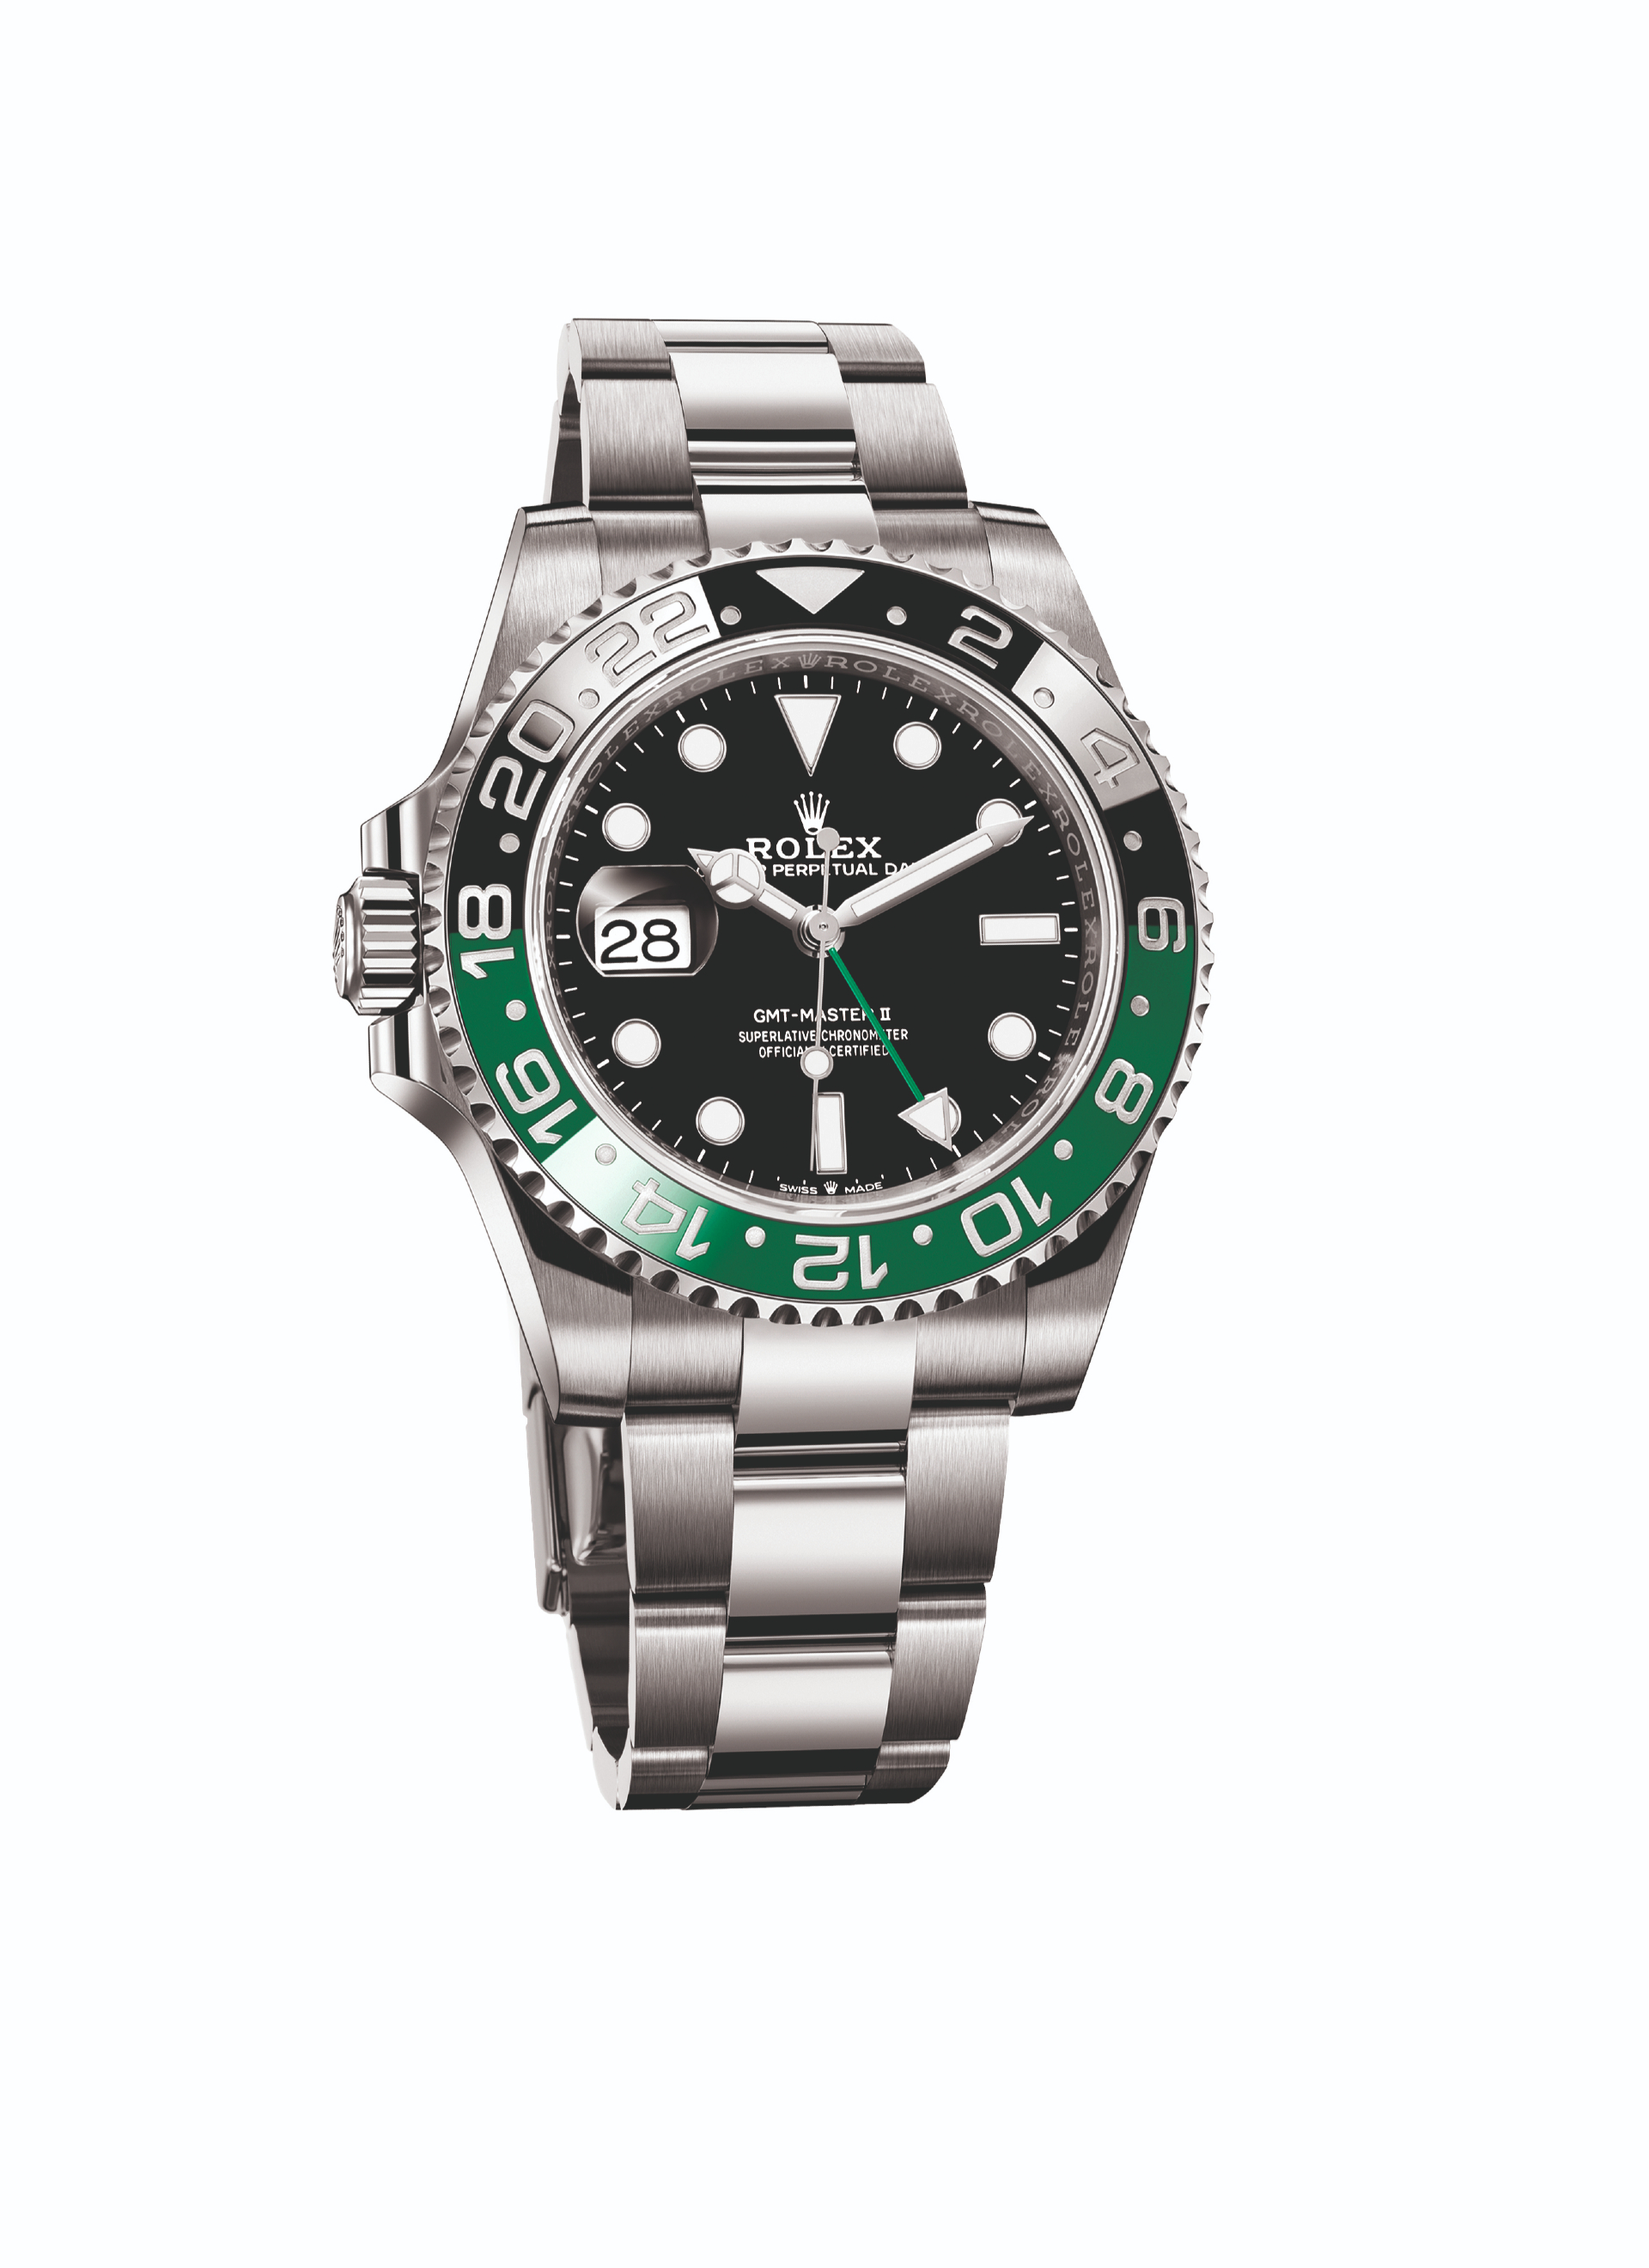 Часы&nbsp;Oyster Perpetual GMT-Master II,&nbsp;Rolex